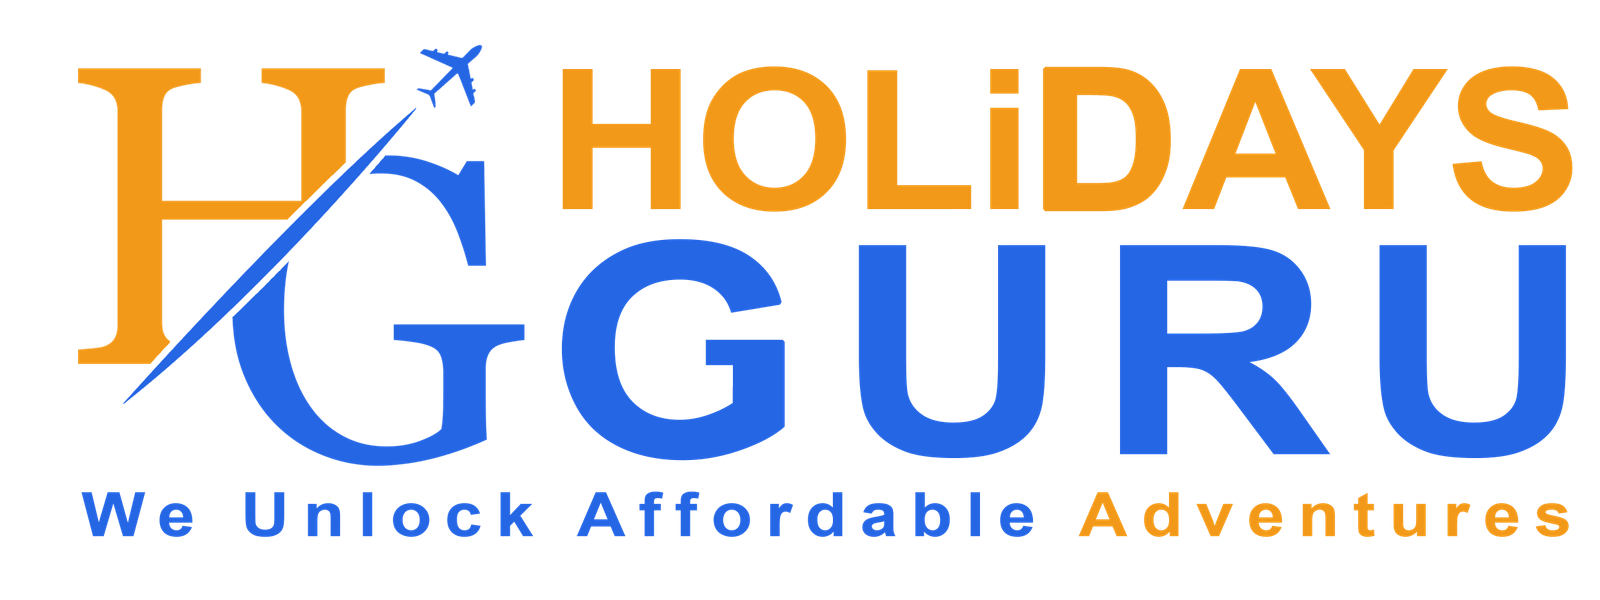 Holidays guru logo 1 (1)(1)